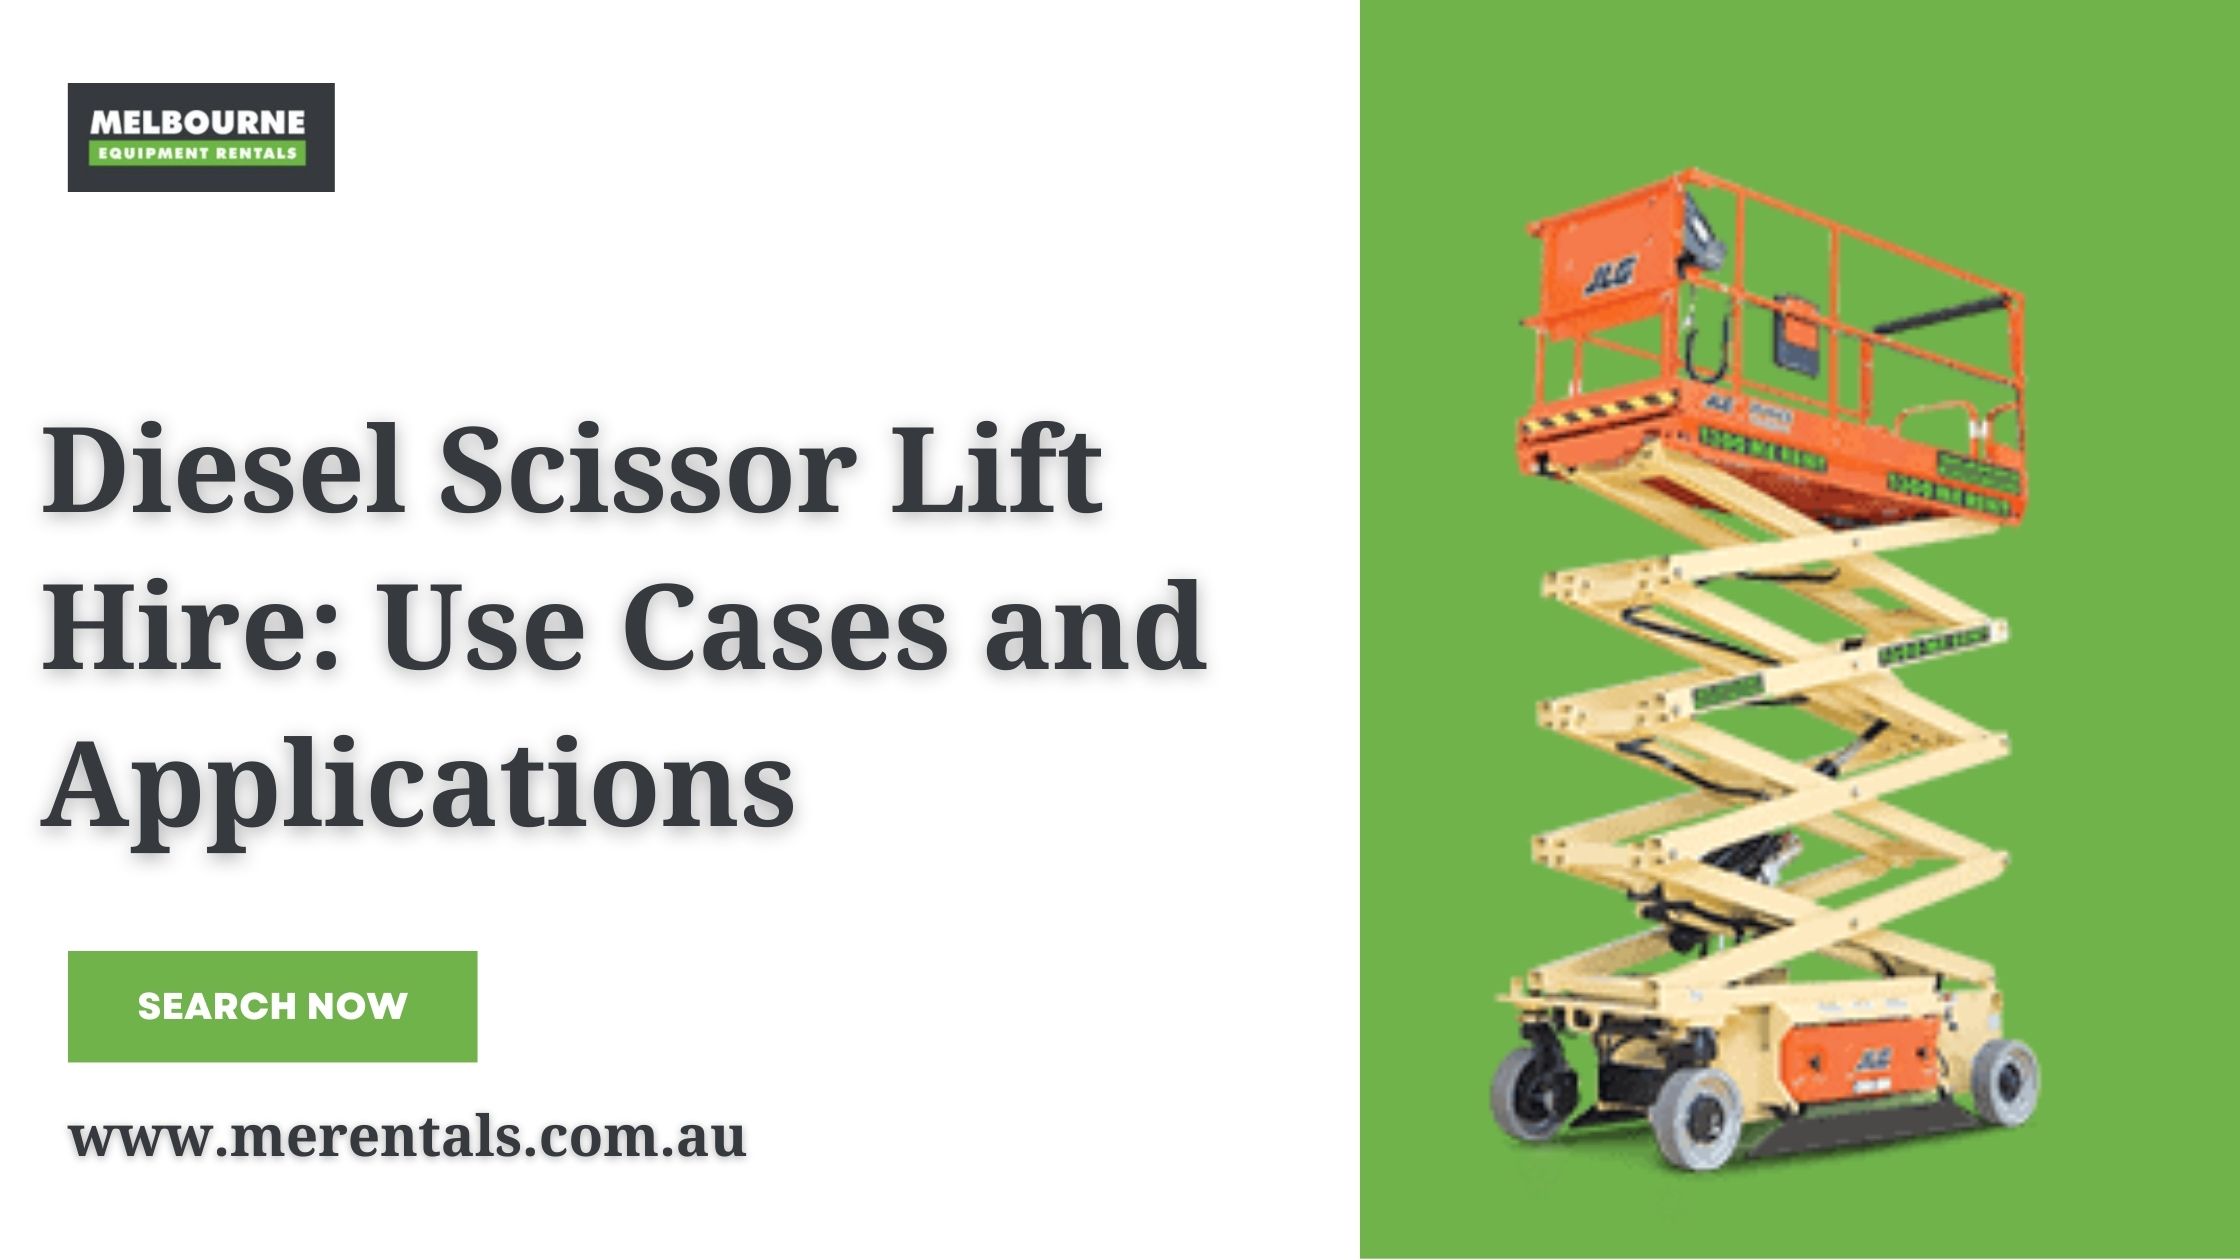 MELBOURNE

Diesel Scissor Lift
Hire: Use Cases and
Applications

www.merentals.com.au